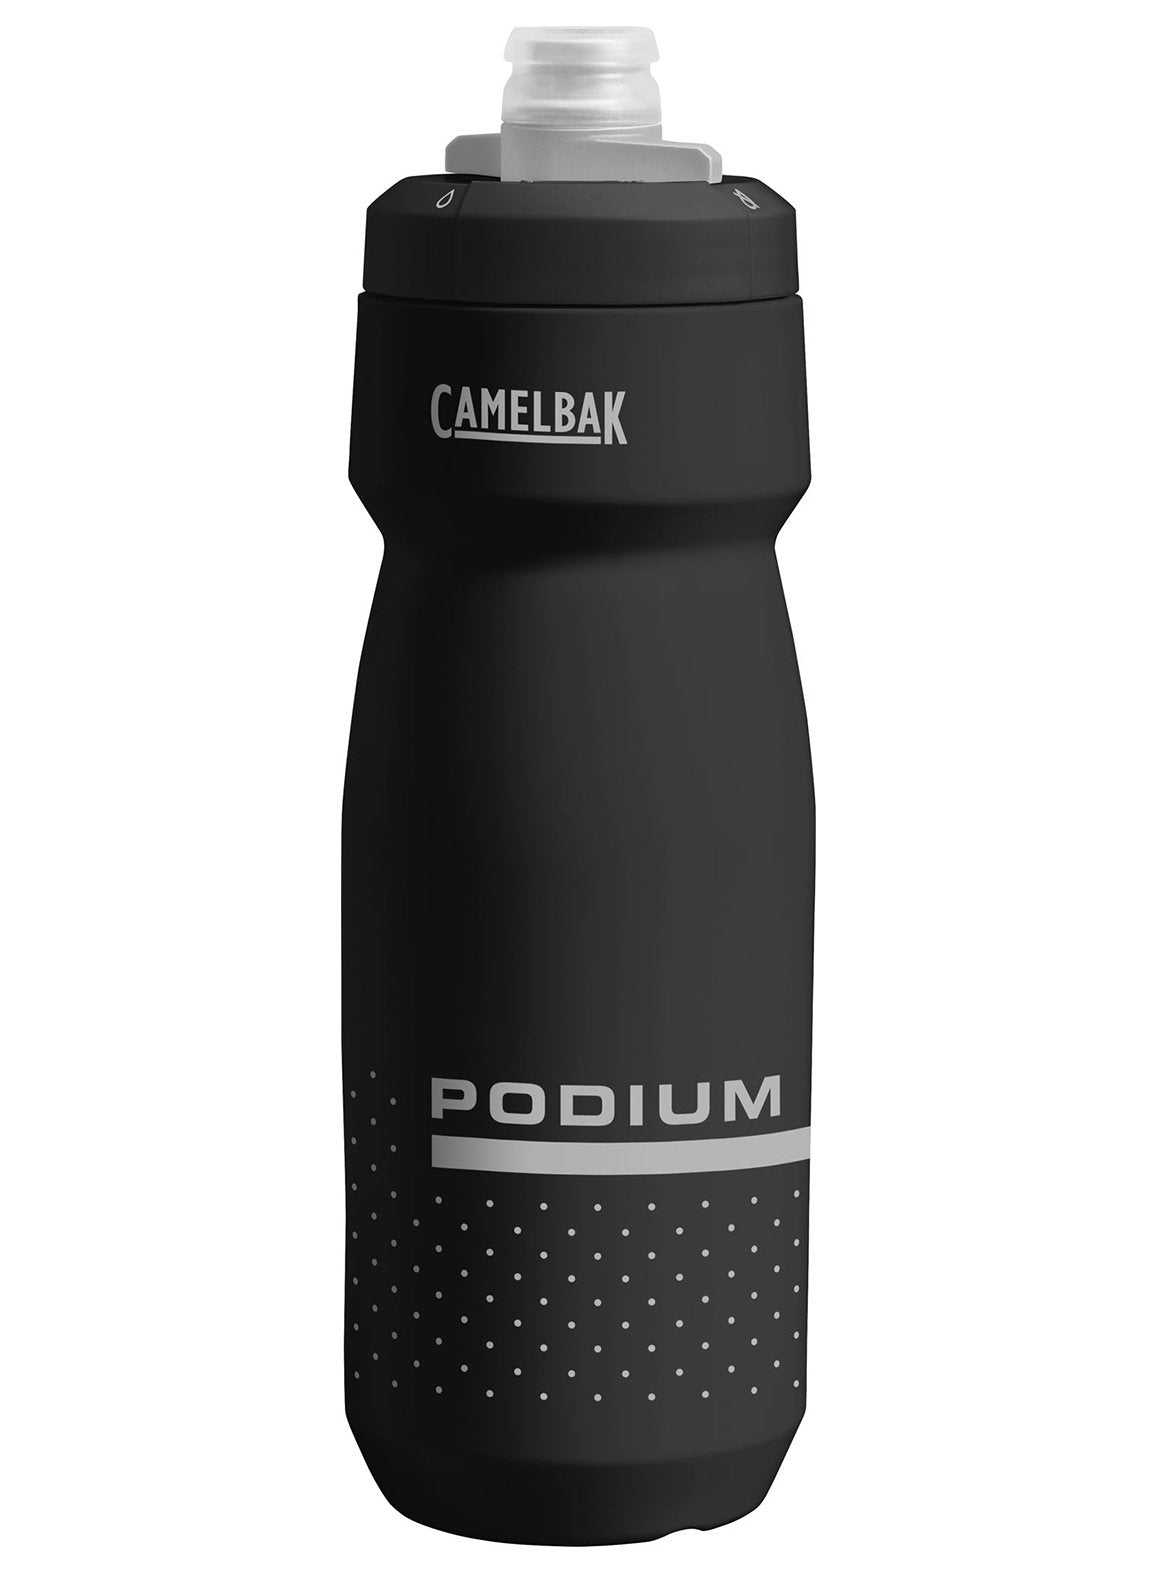 Camelbak Podium Water Bottle - 24oz - Black - 2019 Black  